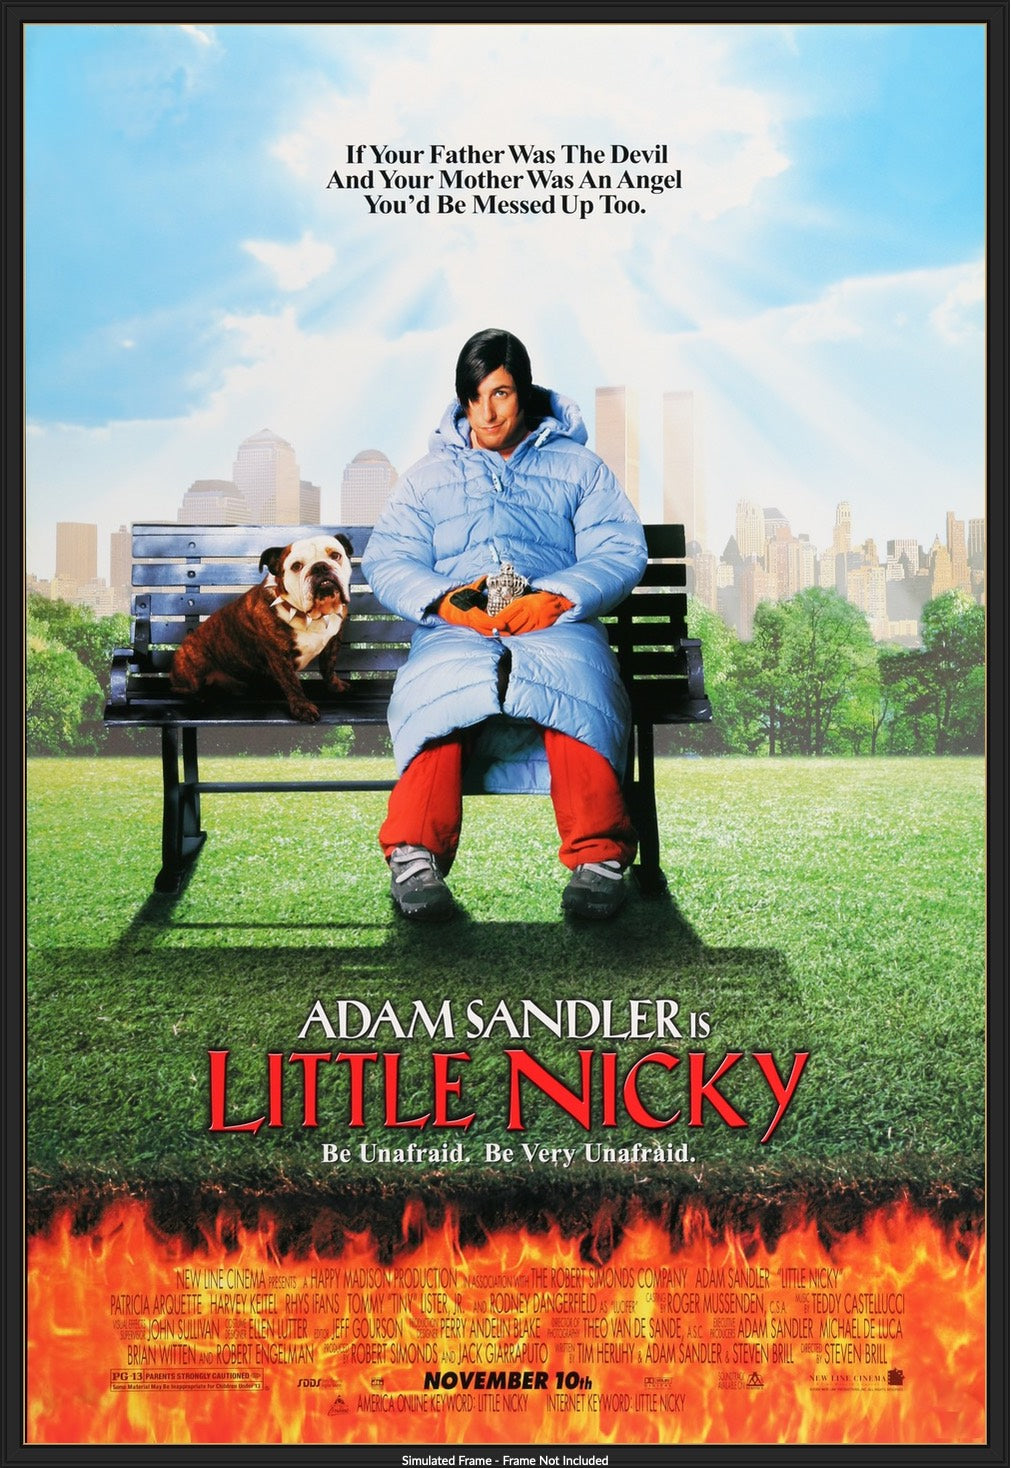 Little Nicky (2000) original movie poster for sale at Original Film Art